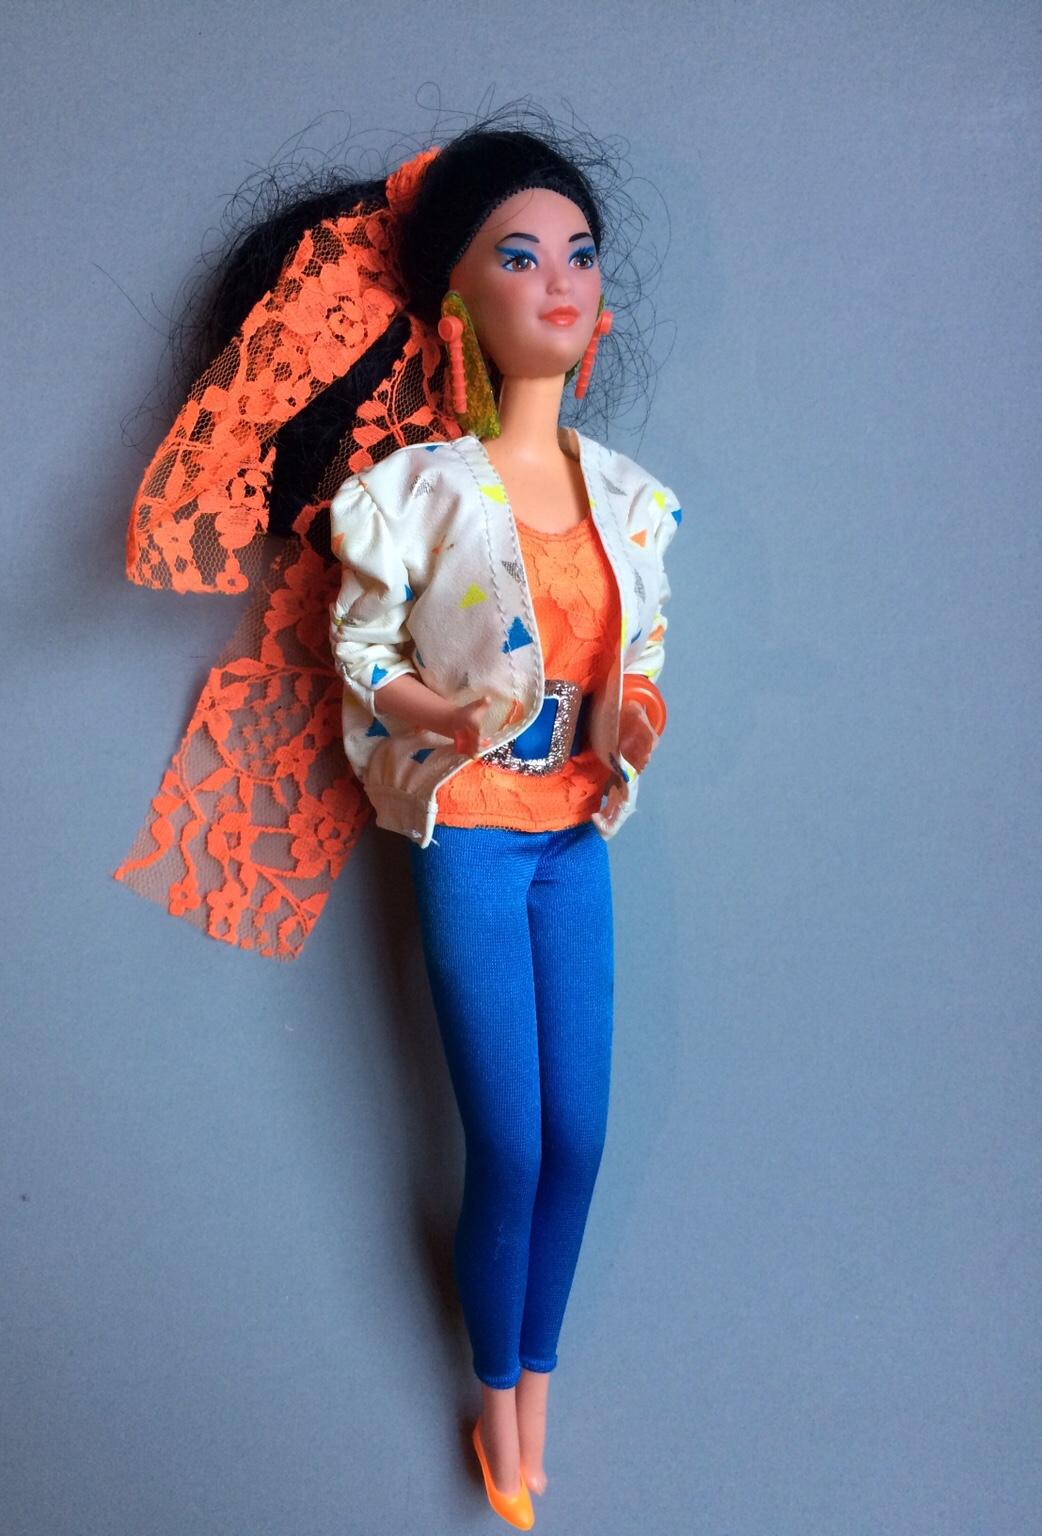 barbie rockstar anni 80